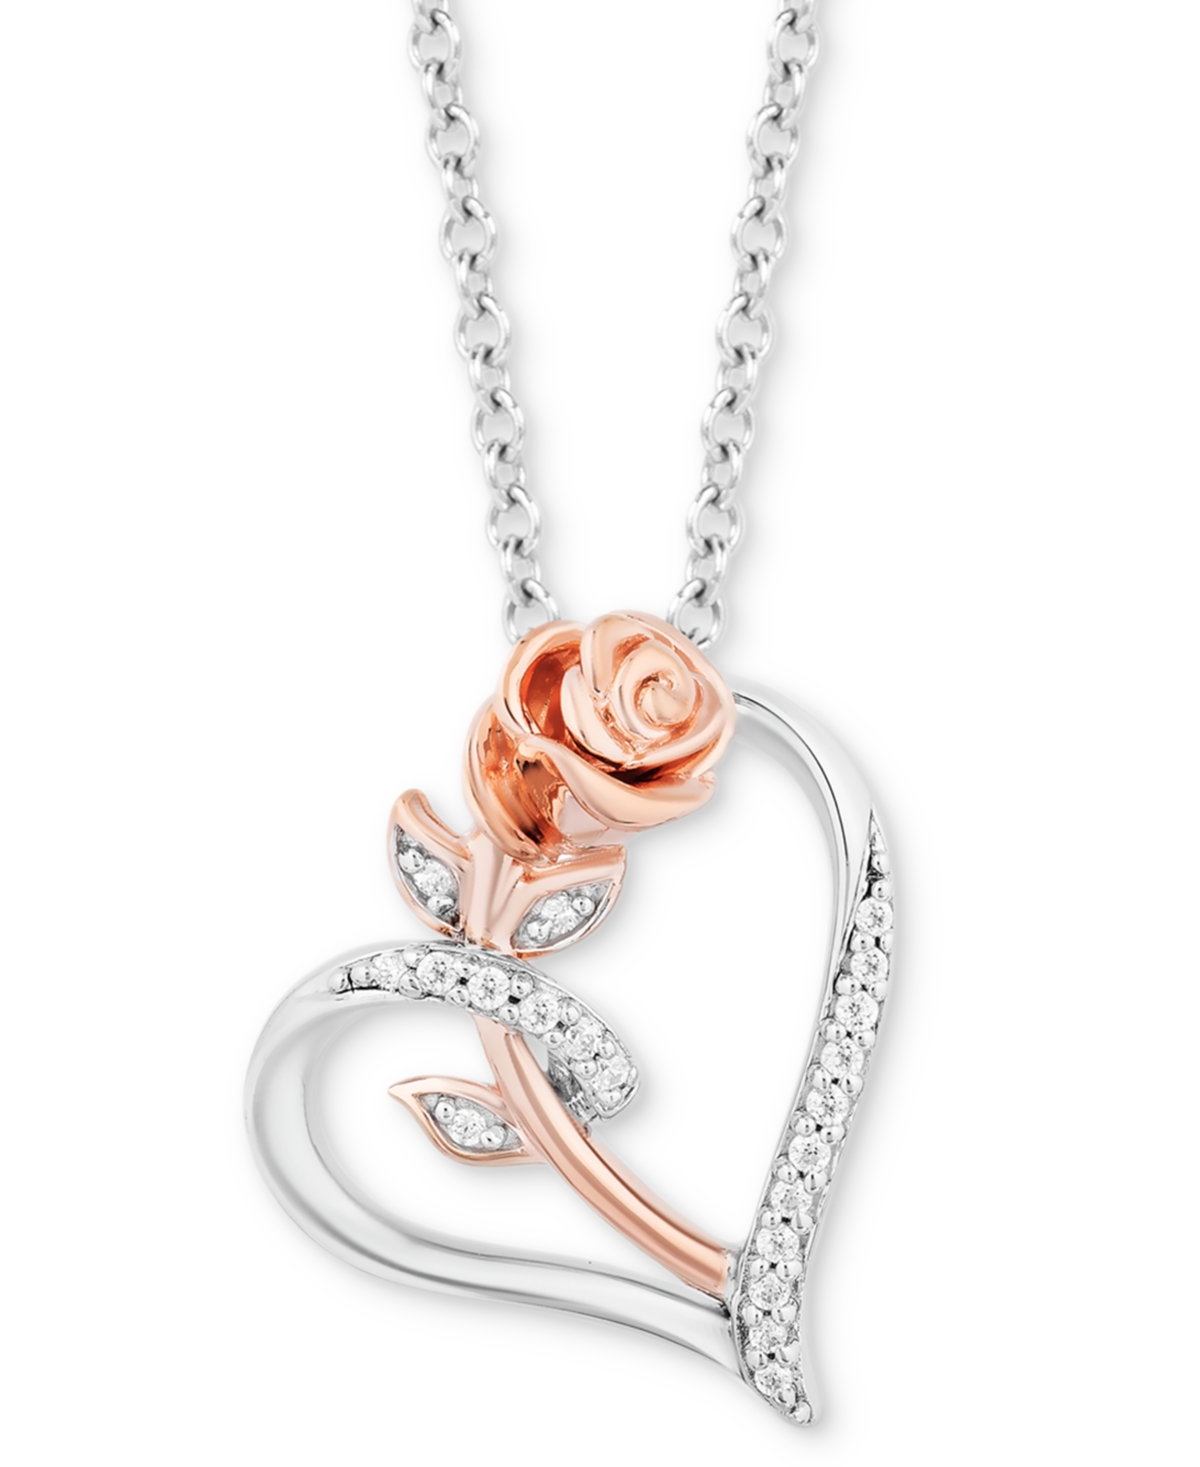 Diamond Belle Rose Heart Pendant Necklace (1/10 ct. t.w.) in Sterling Silver & 14k Rose Gold, 16" + 2" extender - Sterli